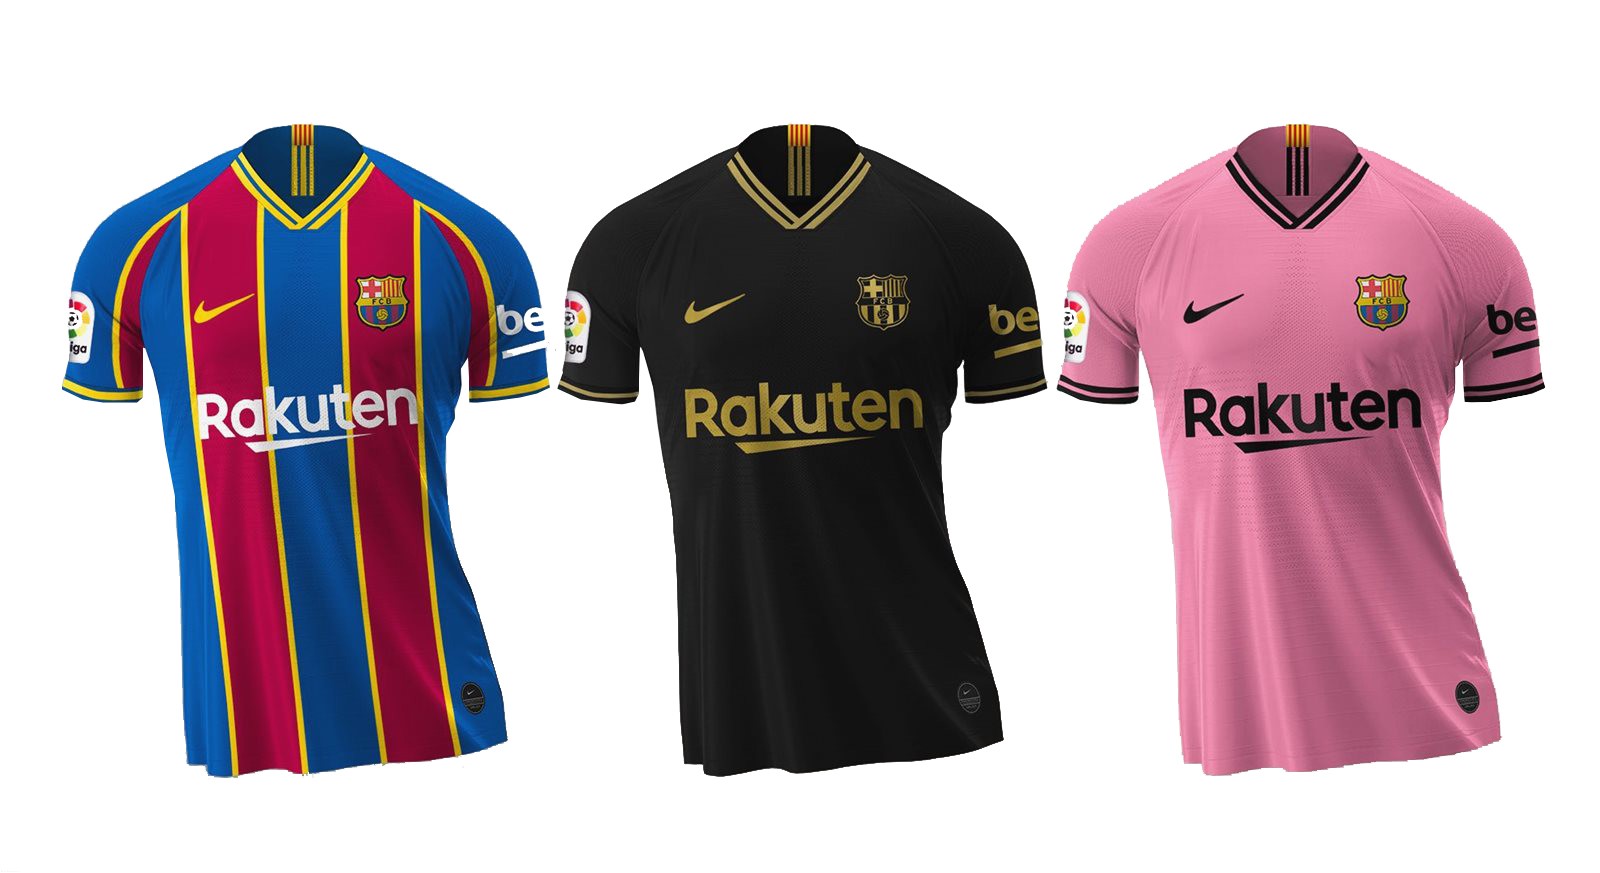 Revealed Football Club Kits In 2020 21